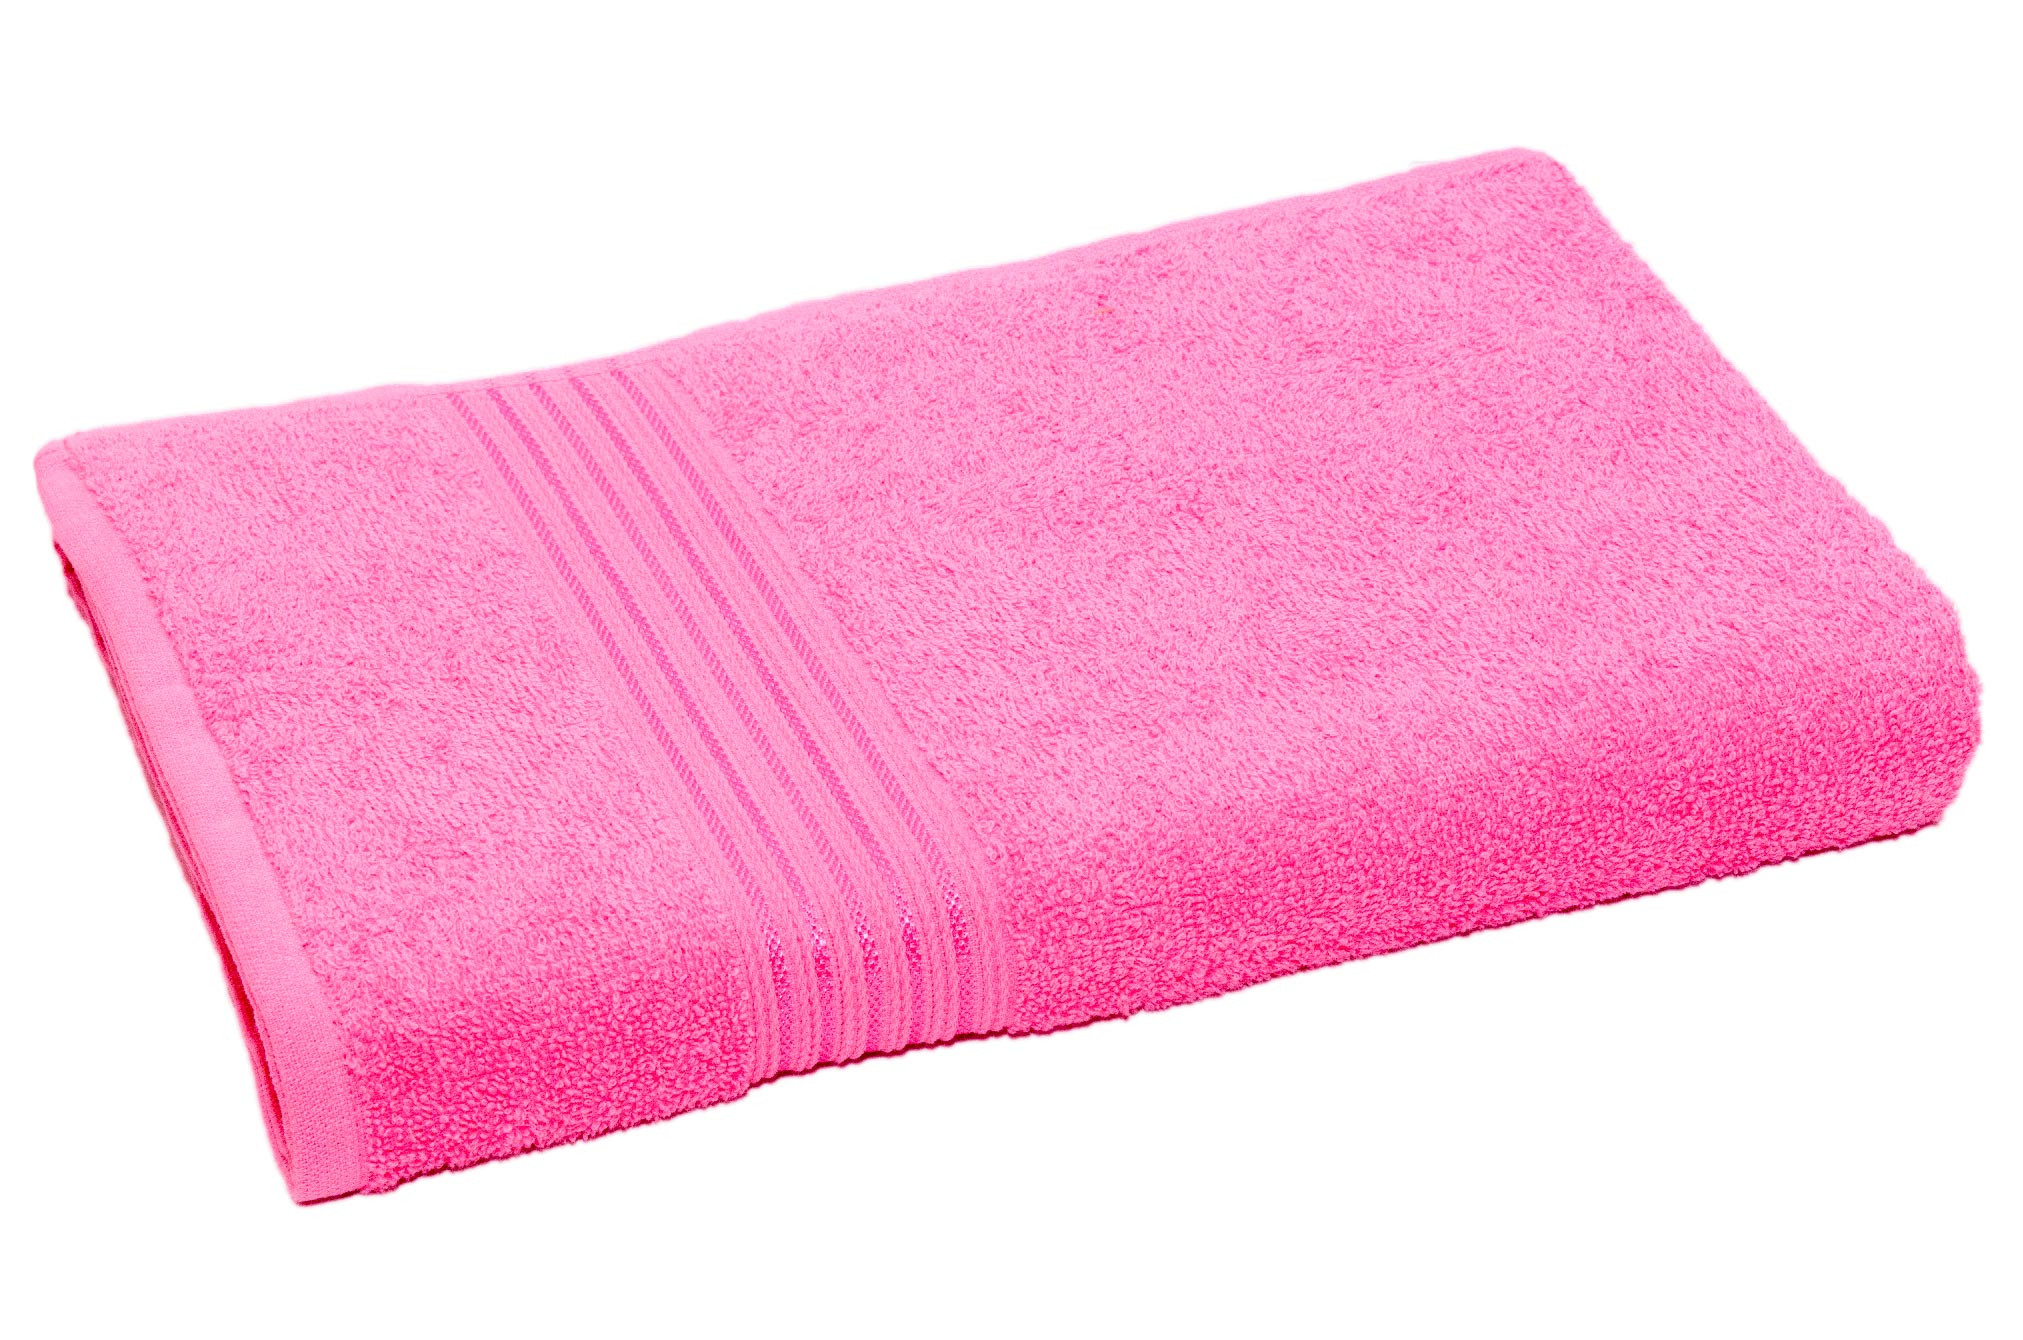 Light Pink Bathroom Towels
 HomeStrap Towels Bathroom Linen Home & Kitchen